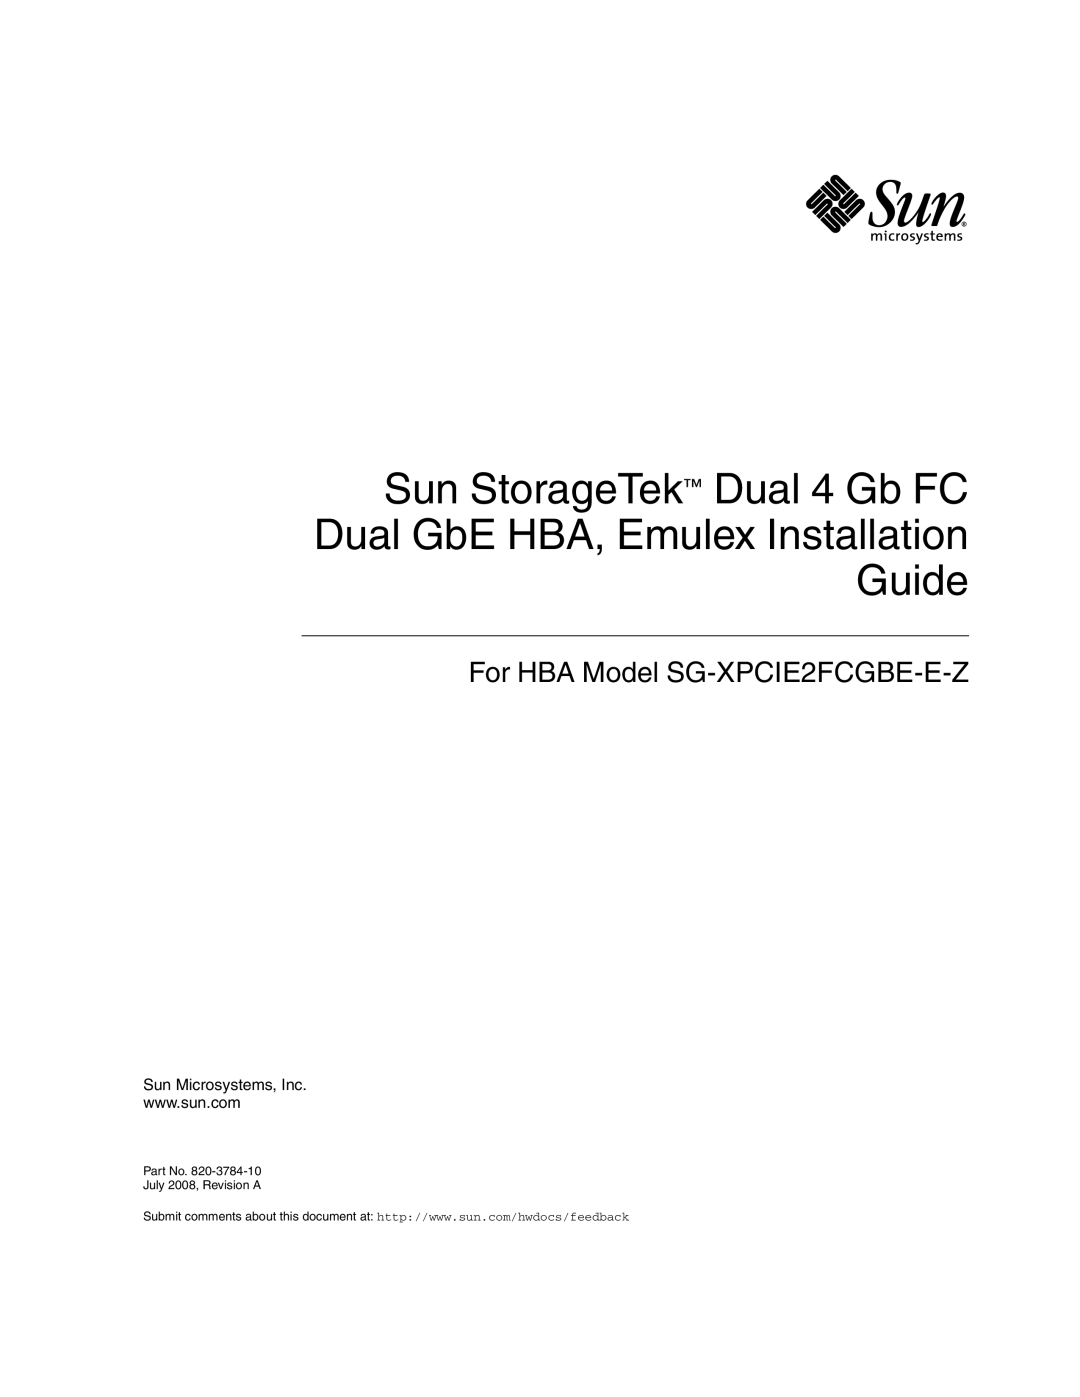 Sun Microsystems SG-XPCIE2FCGBE-E-Z manual Sun StorageTek Dual 4 Gb FC Dual GbE HBA, Emulex Installation Guide 